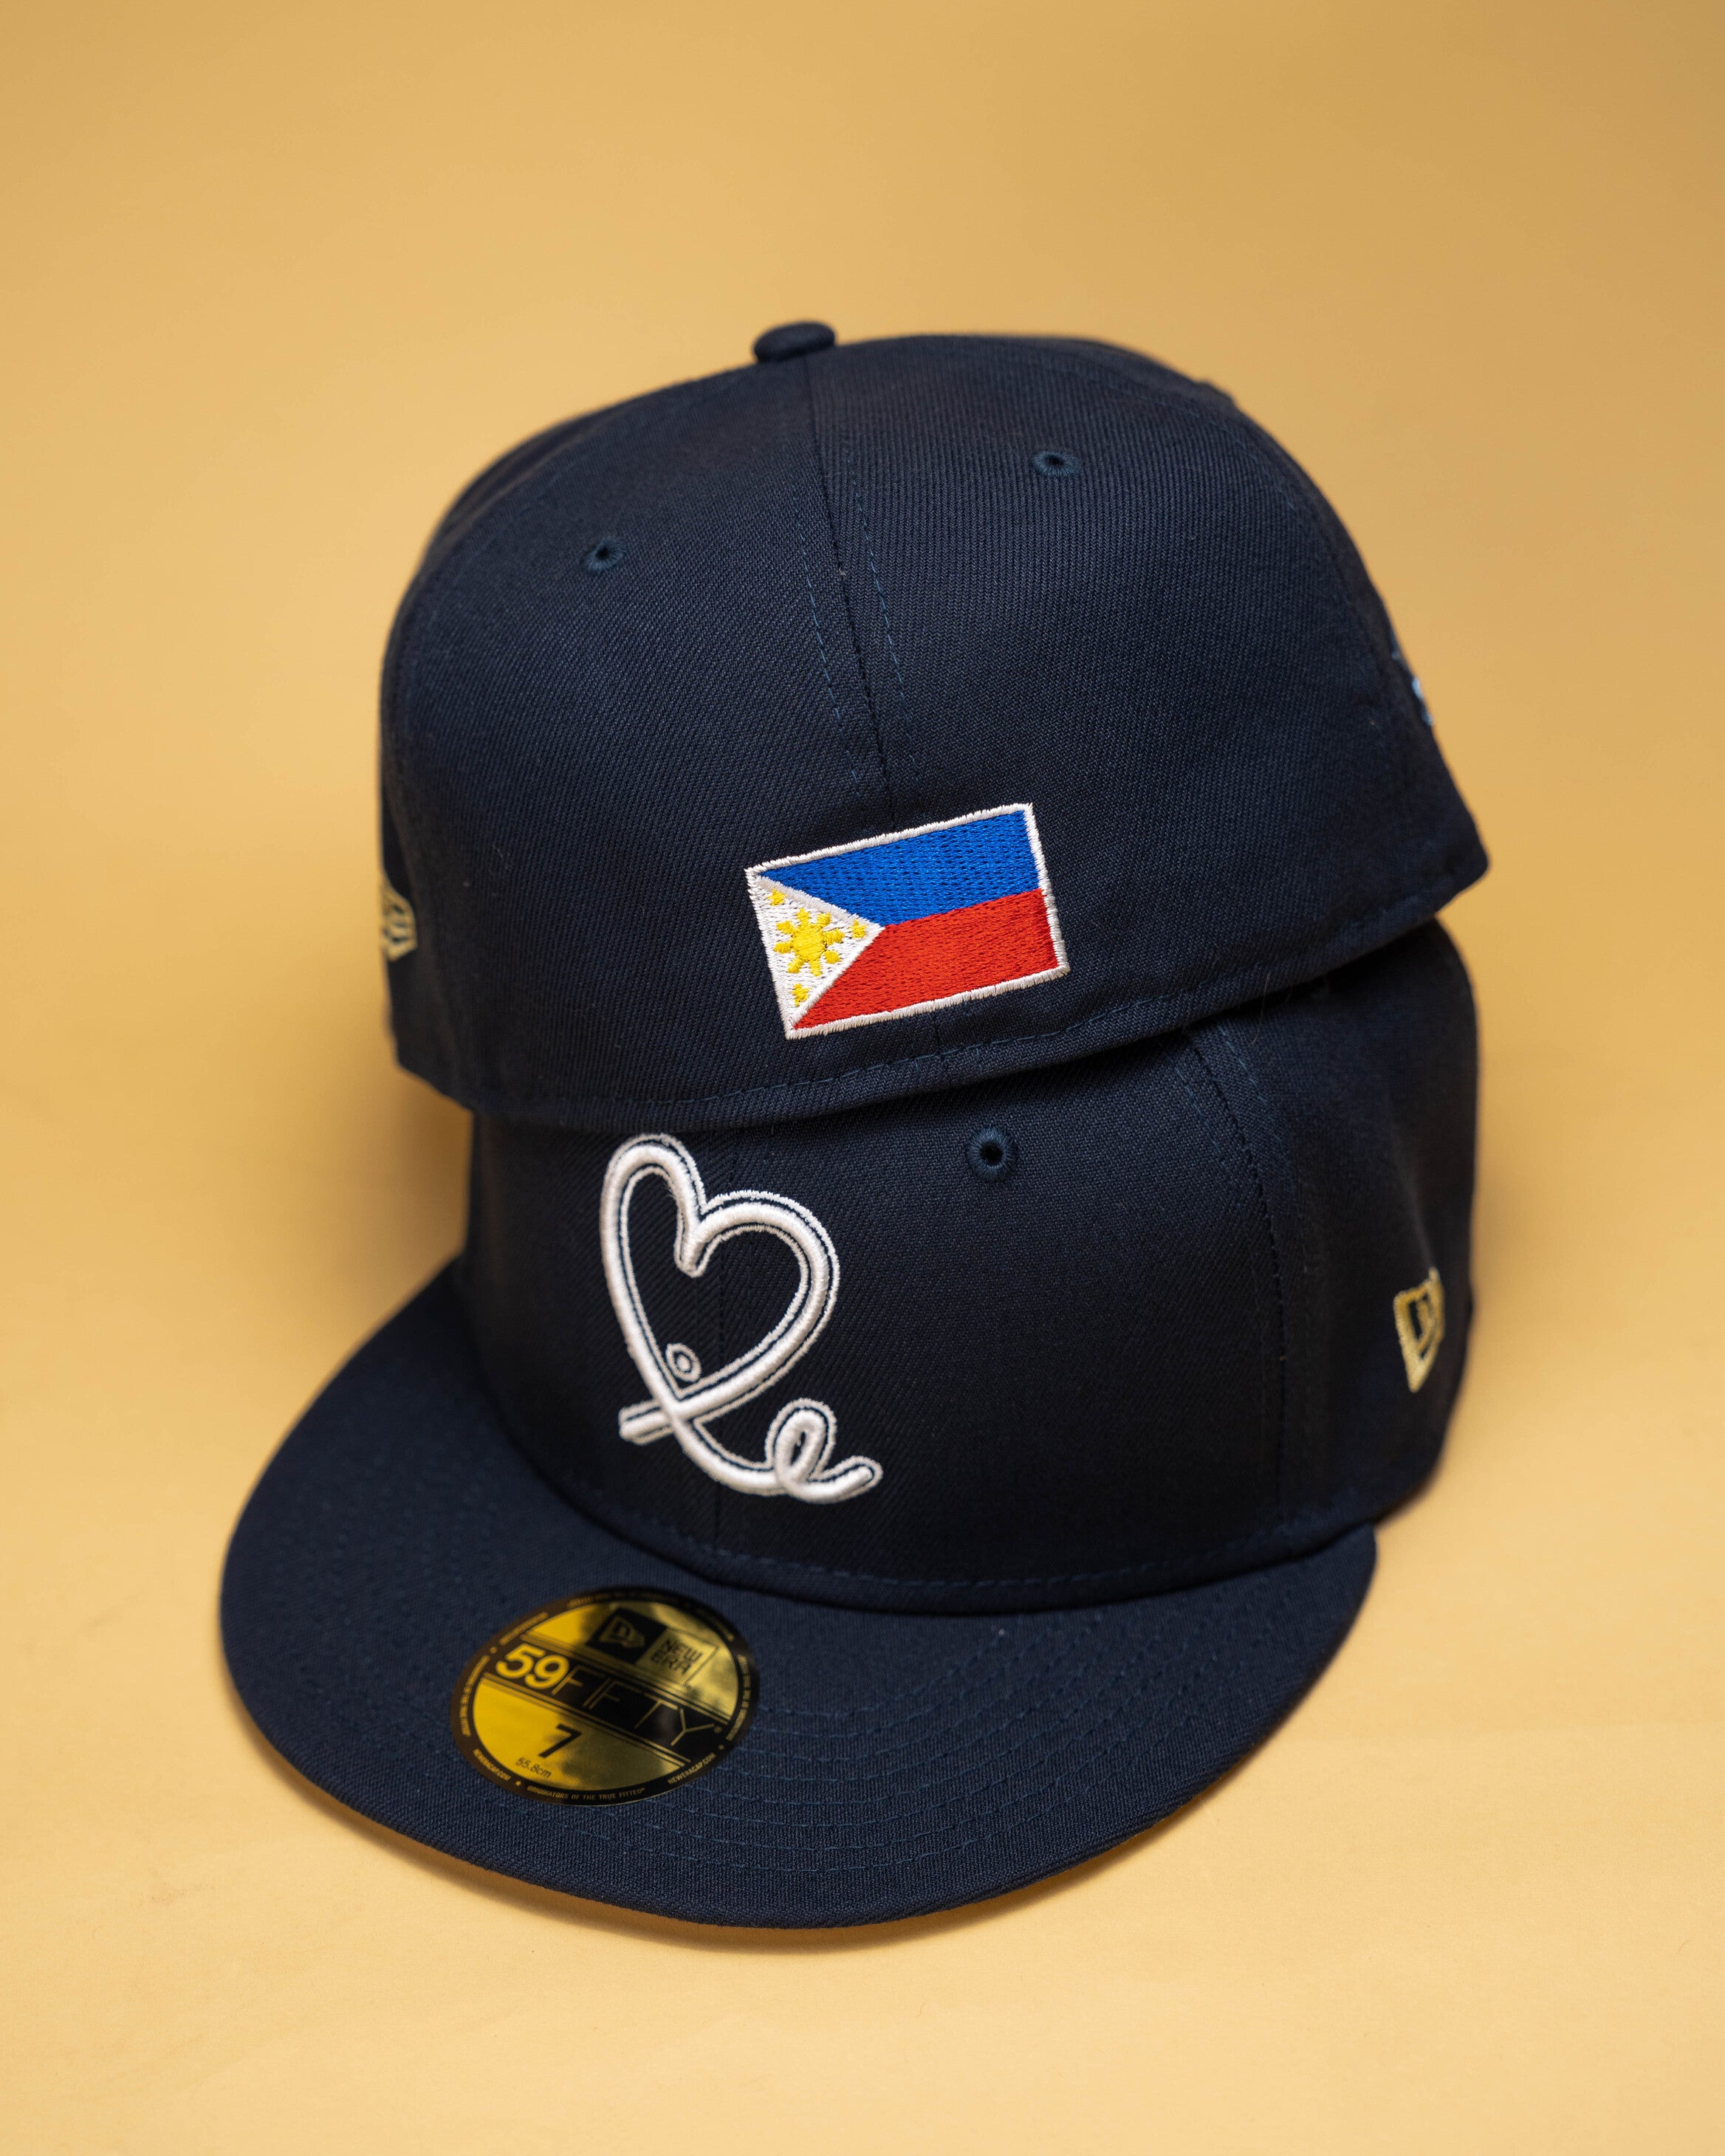 New Era, Accessories, Pr Puerto Rico Fitted Hat